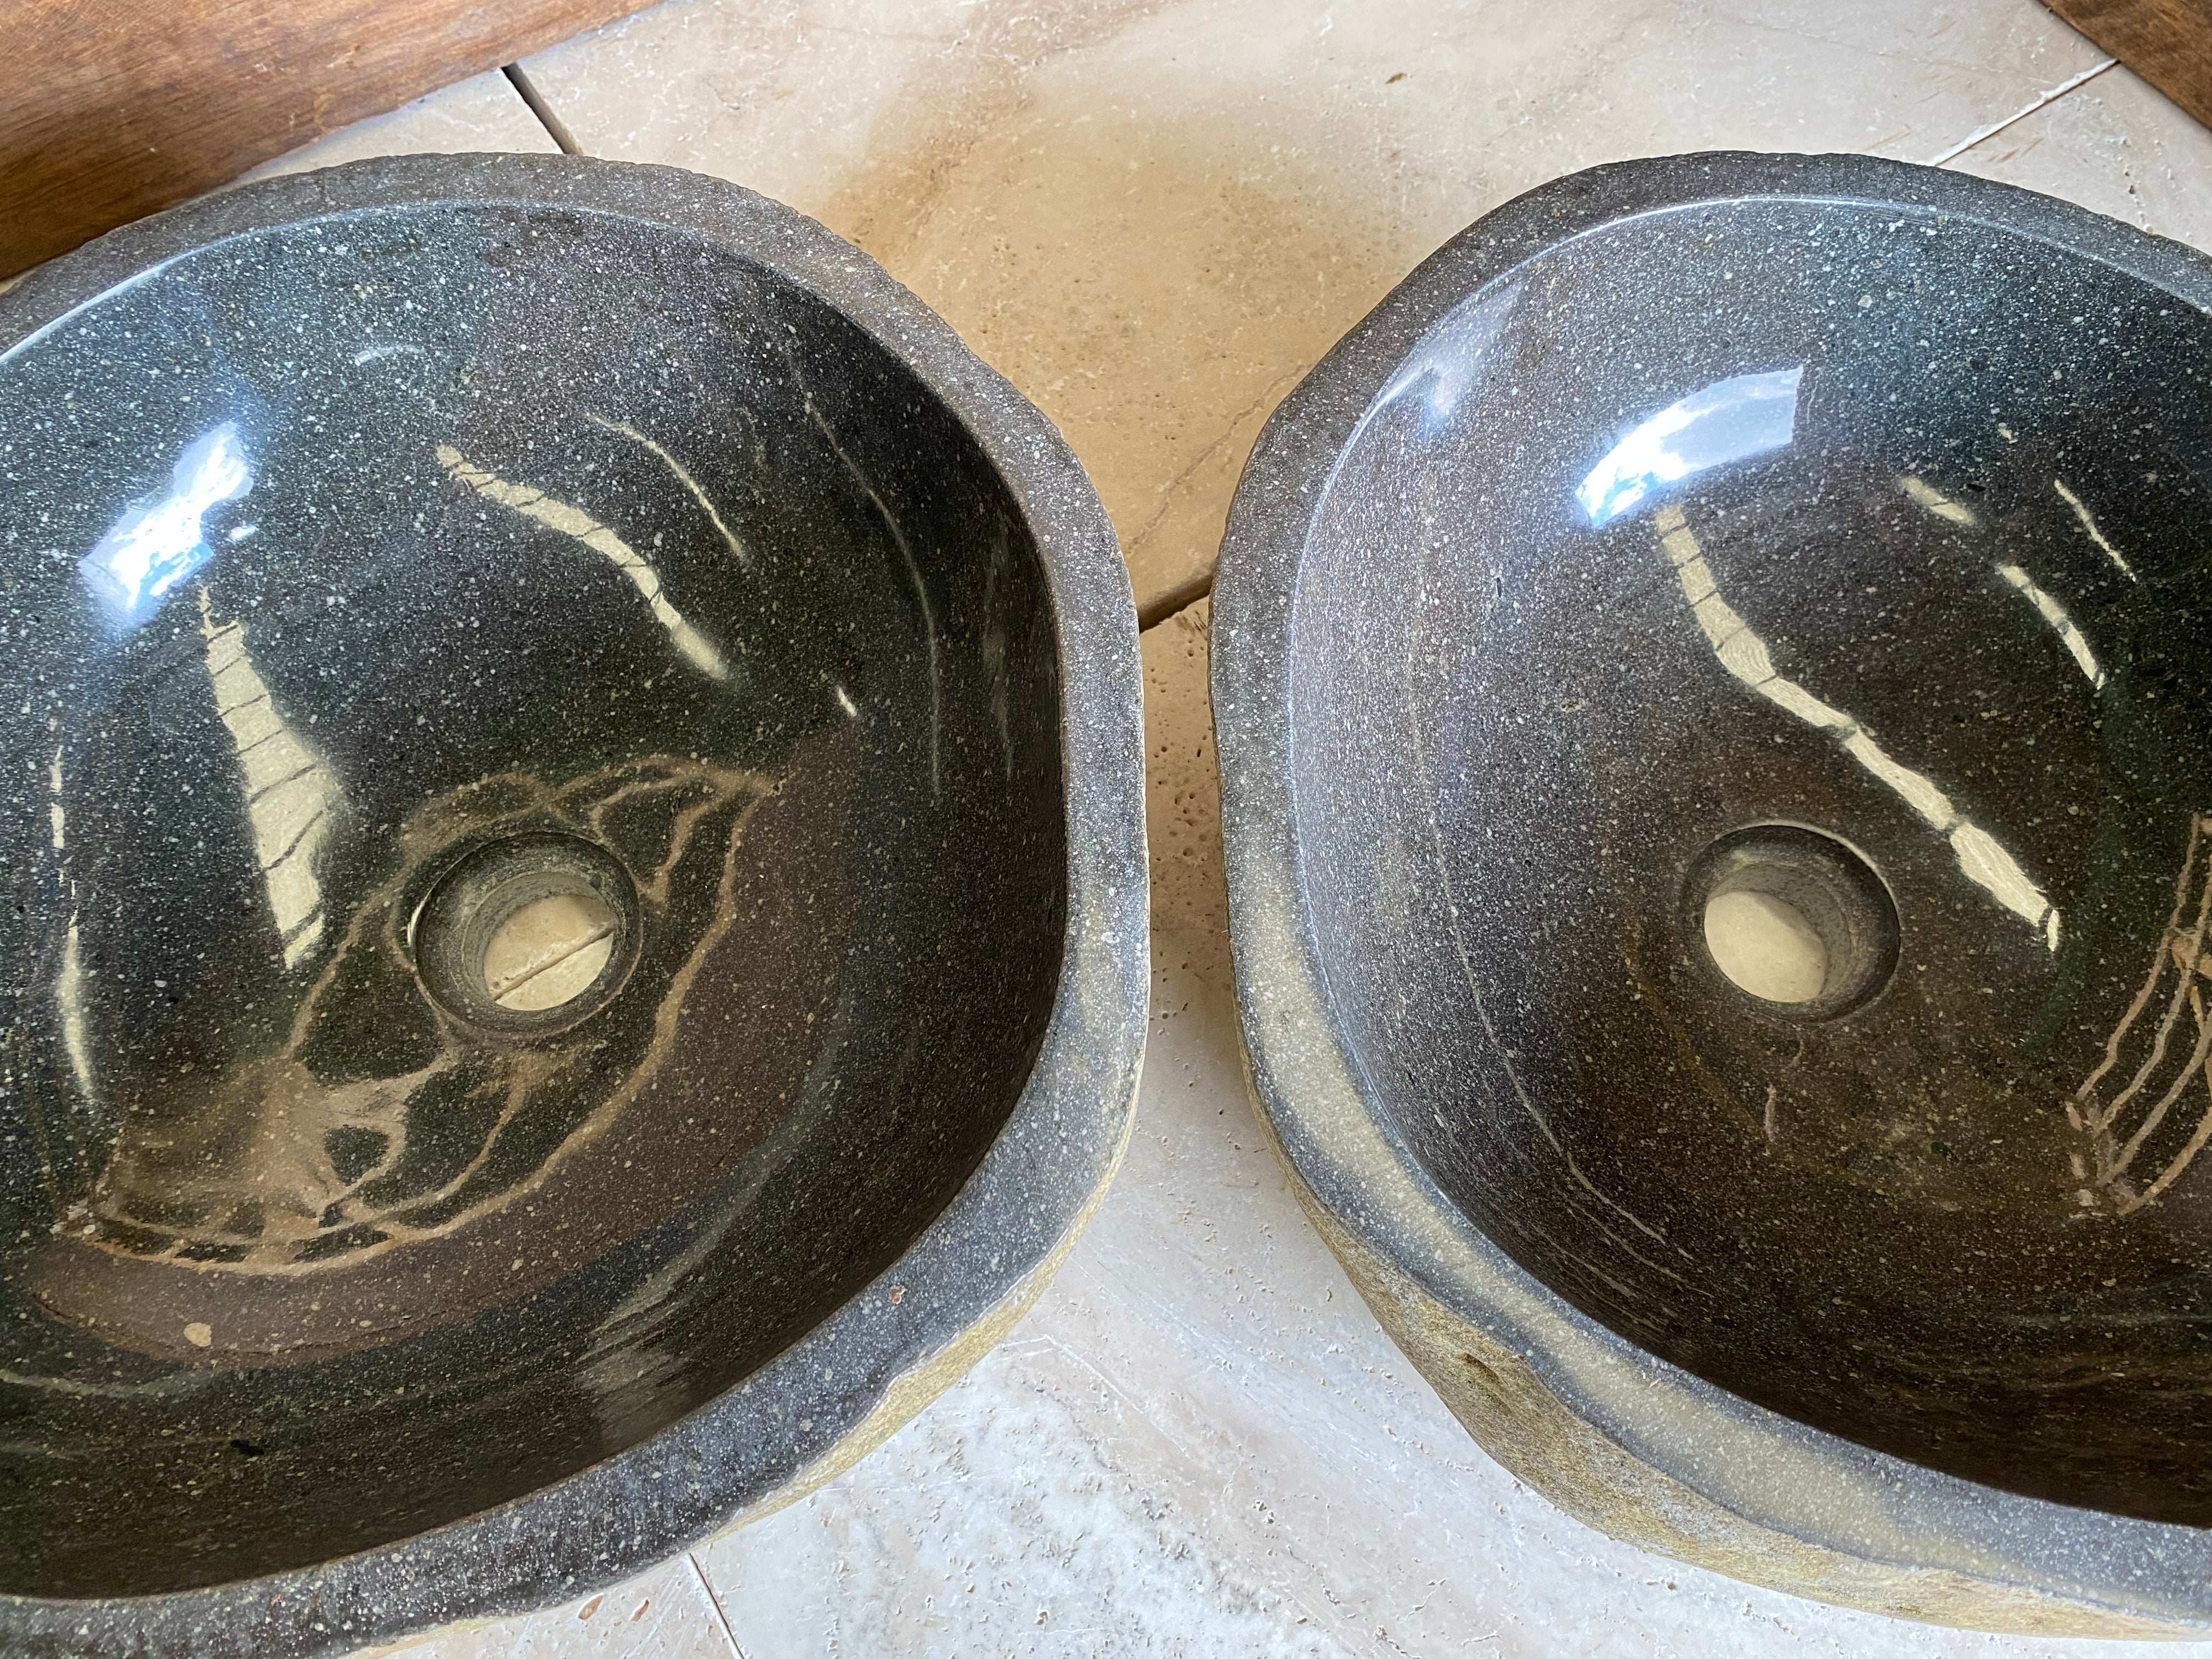 Handmade Natural Oval River Stone Bathroom Basin - Twin Set RM230611